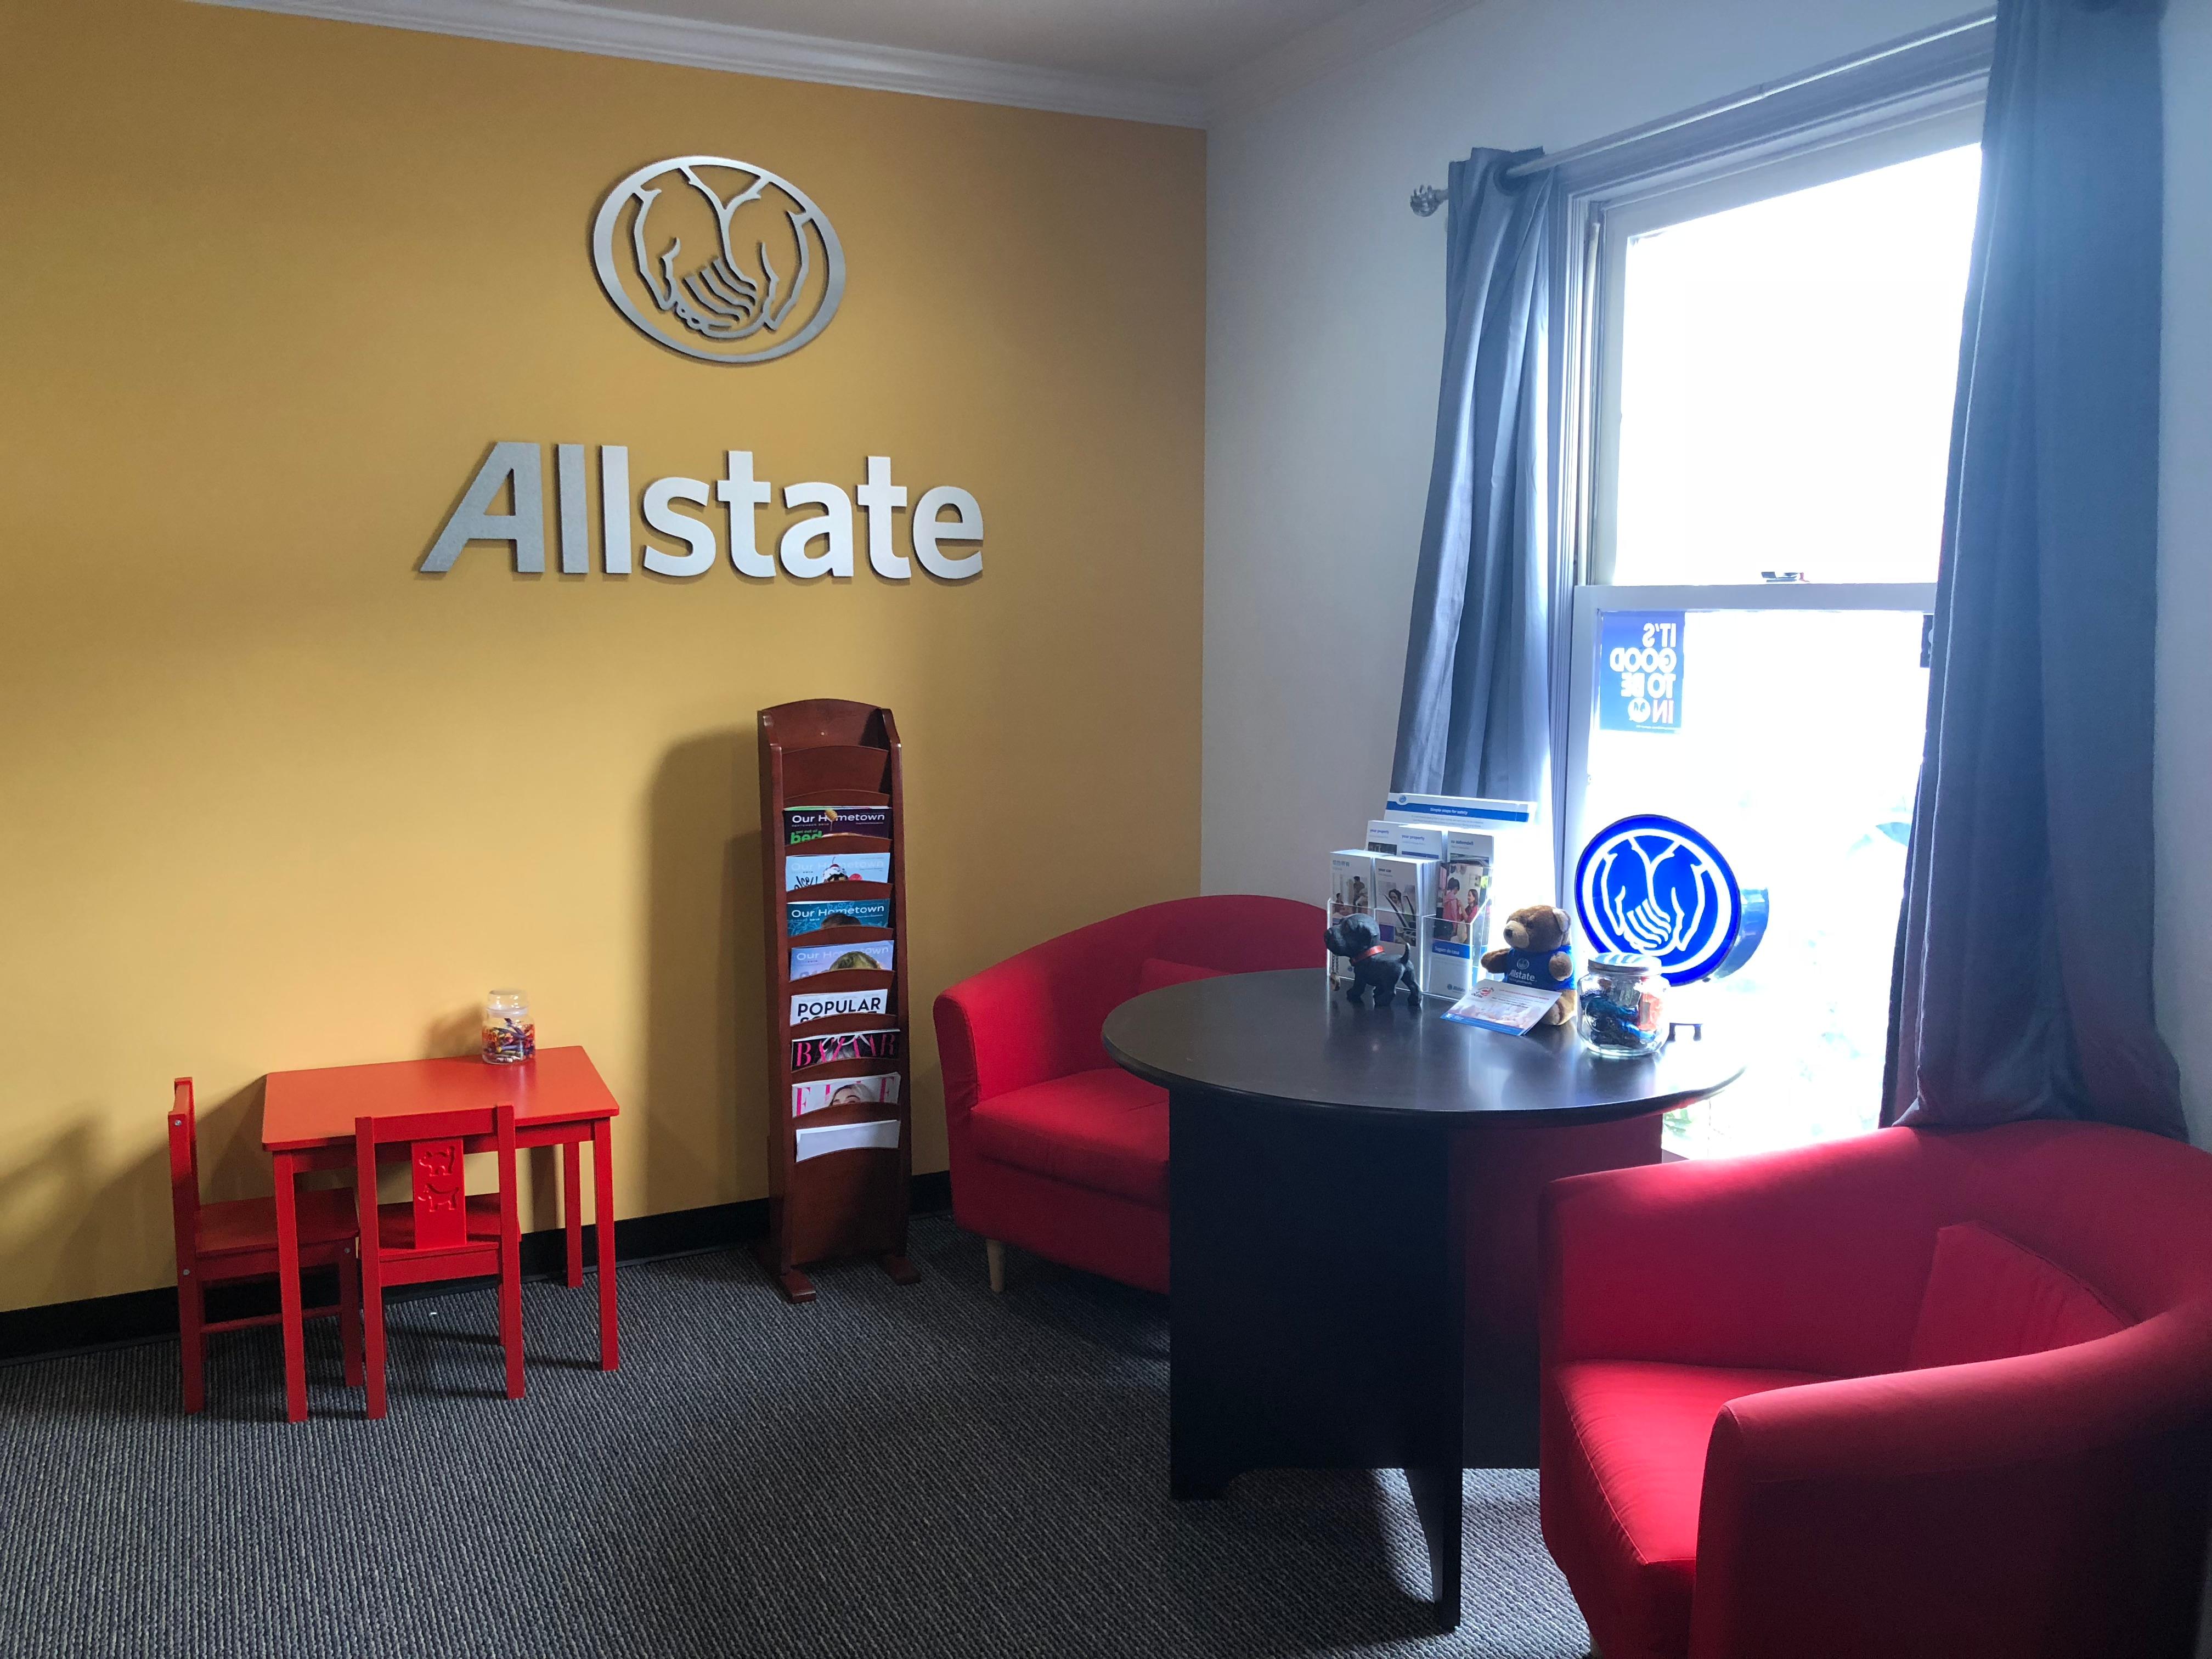 Hui Mei Tai: Allstate Insurance Photo